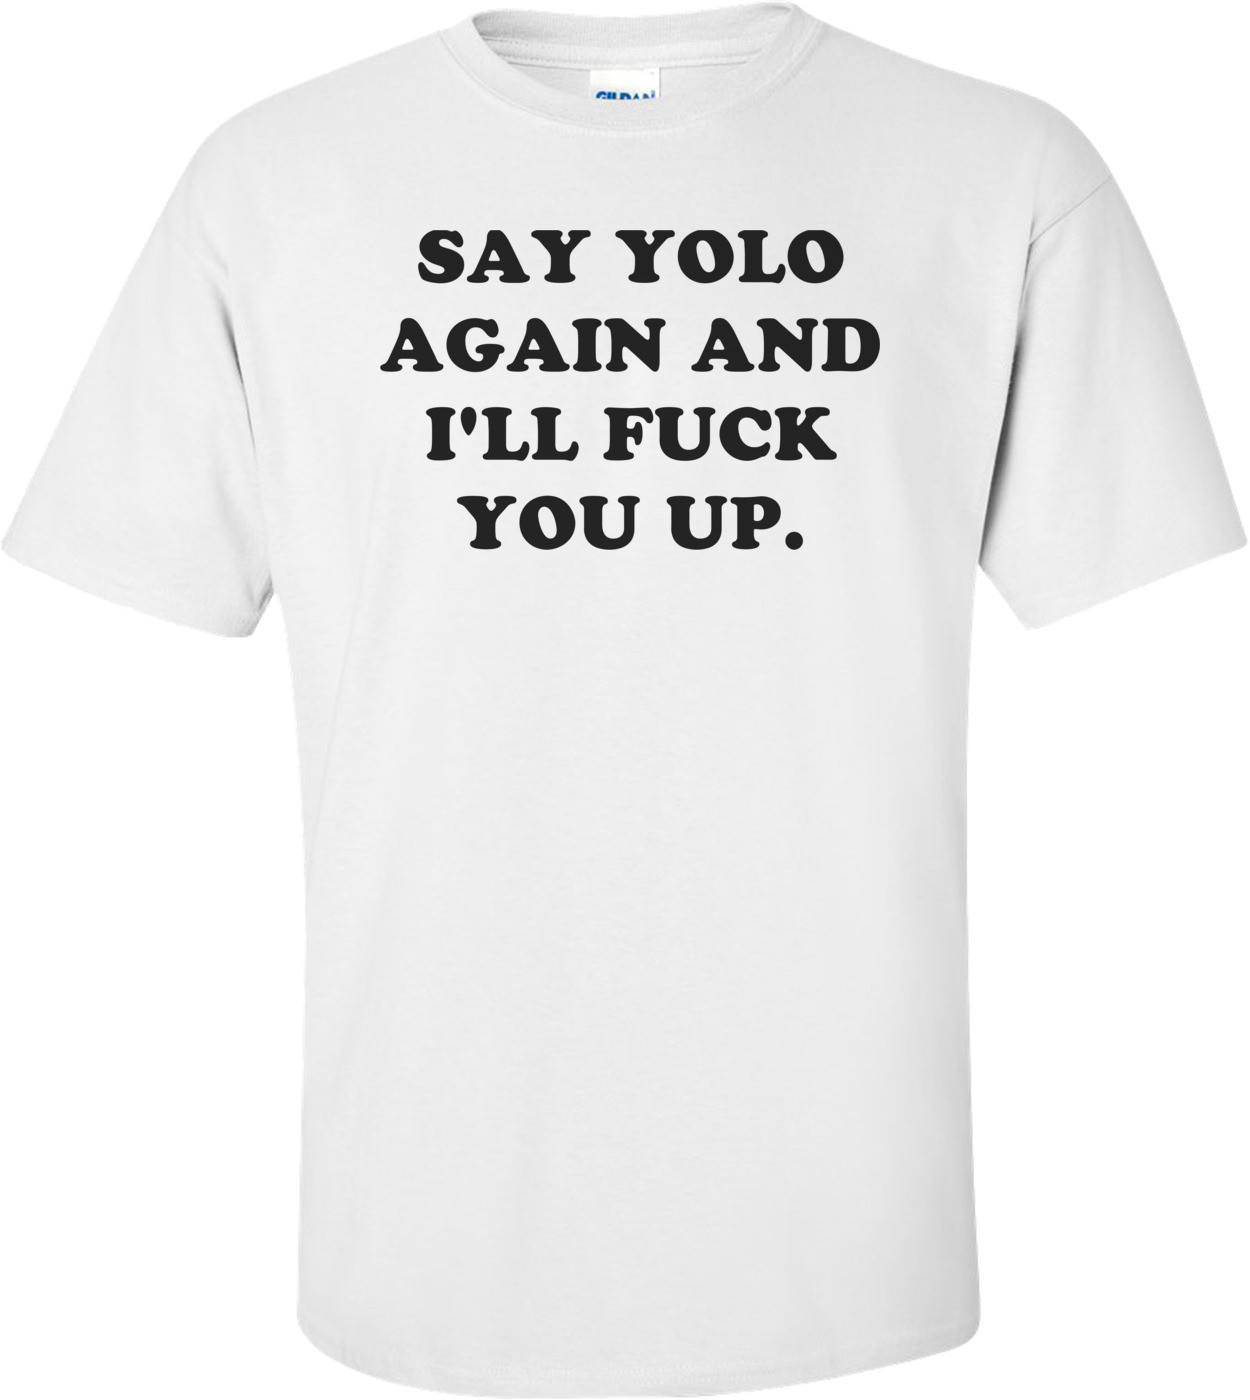 SAY YOLO AGAIN AND I'LL FUCK YOU UP. Shirt